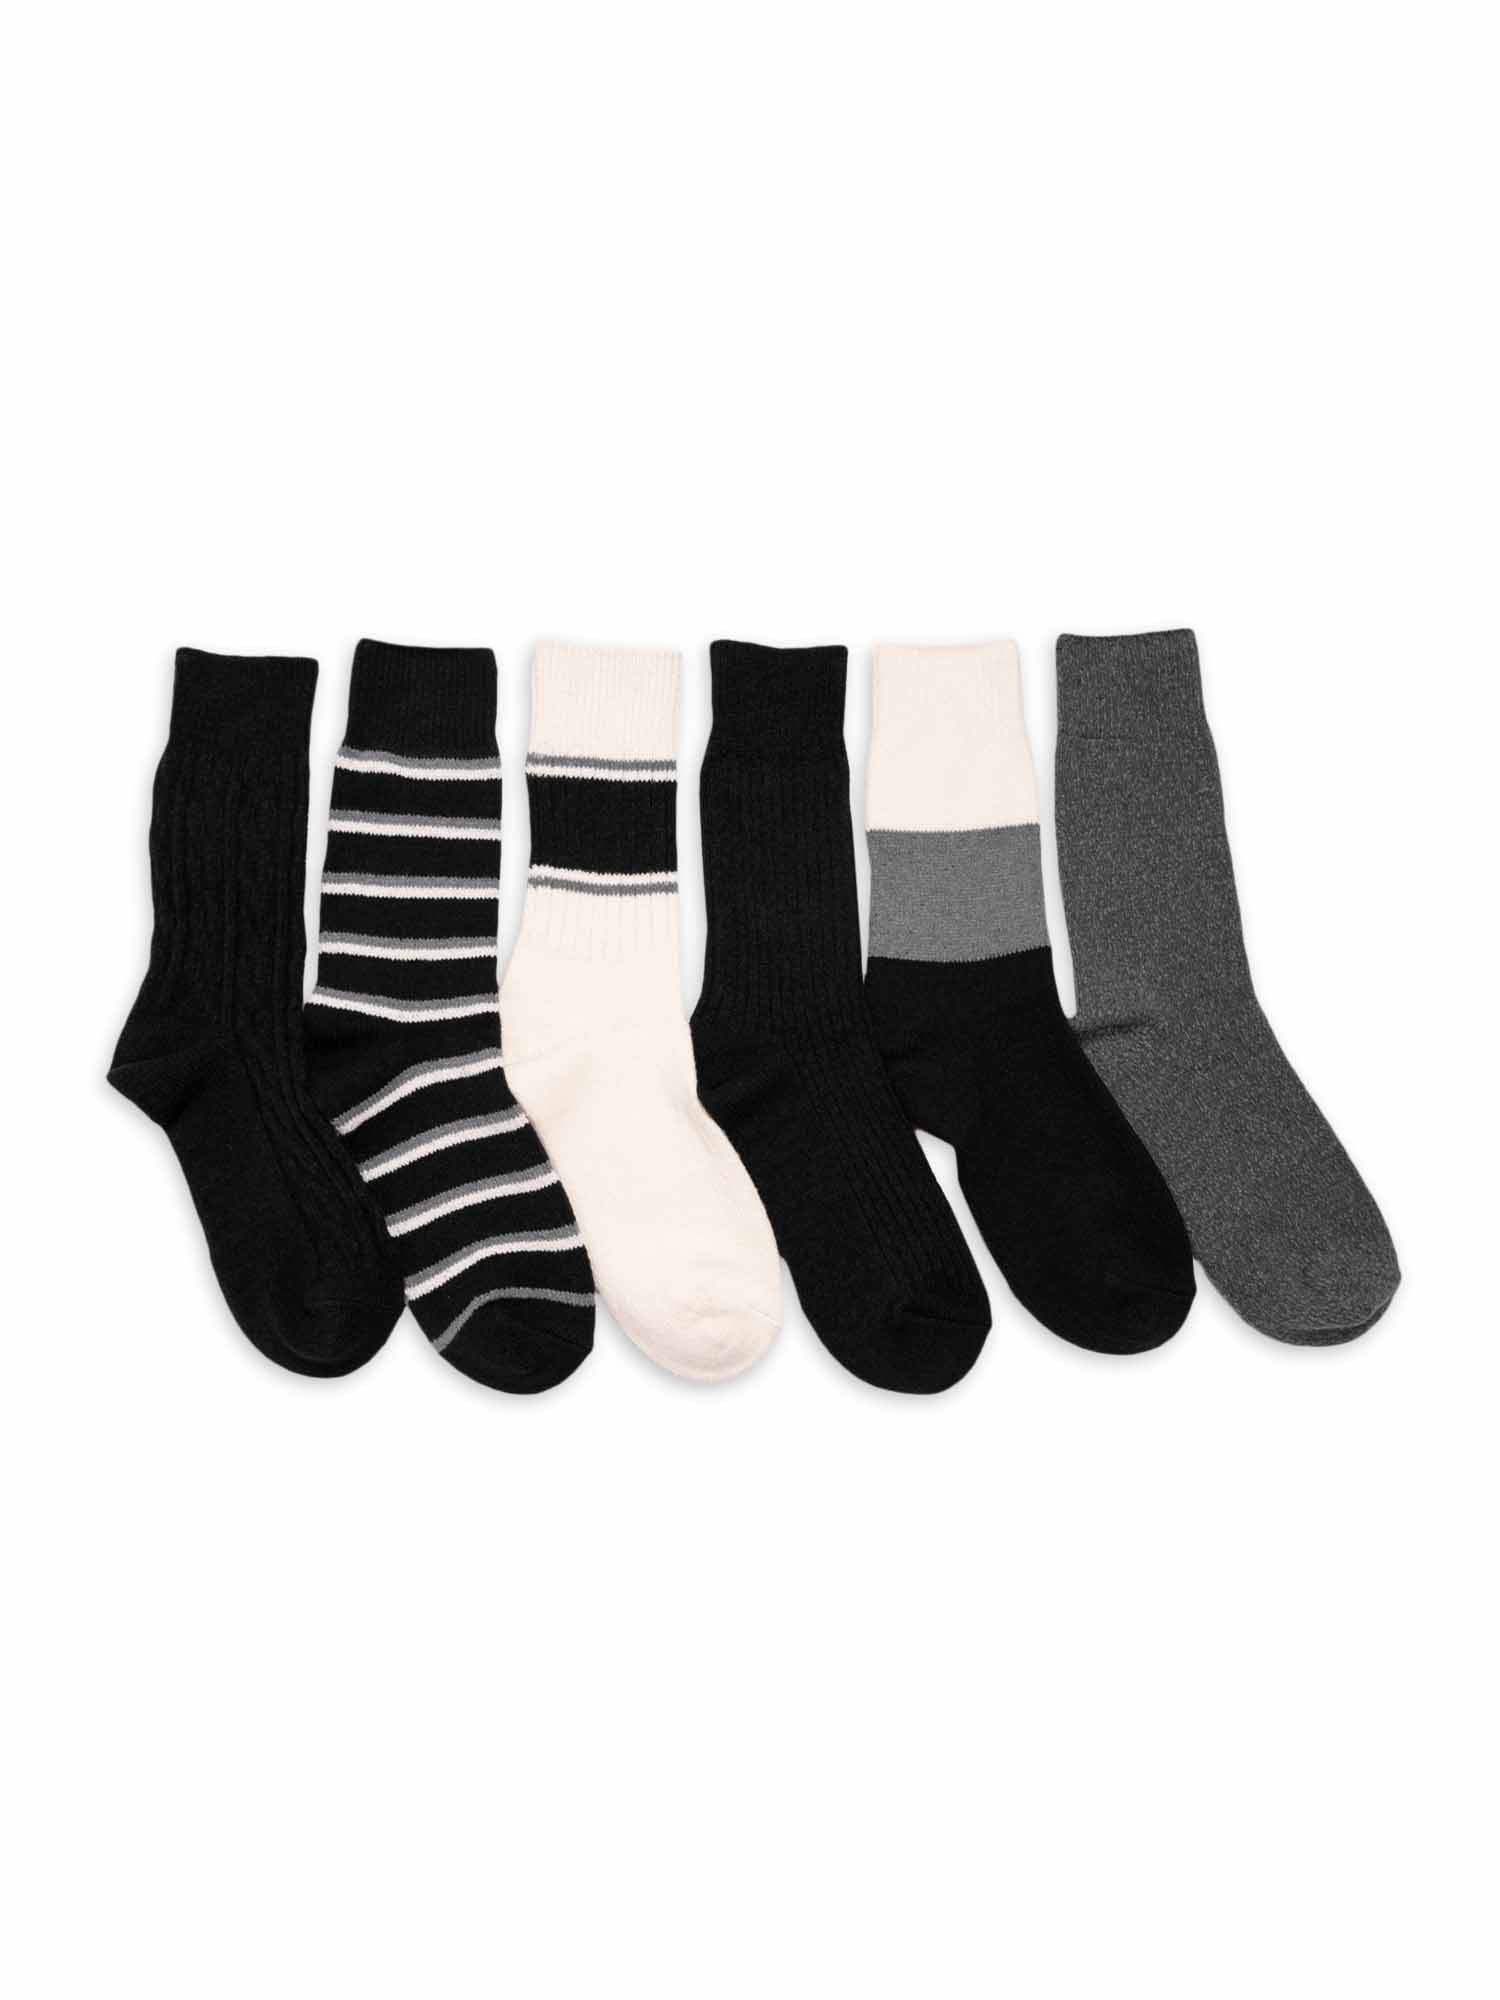 Muk Luks Women's Crew Boot Socks, 6-Pack, Fits Shoe Sizes:  6-10 | Walmart (US)